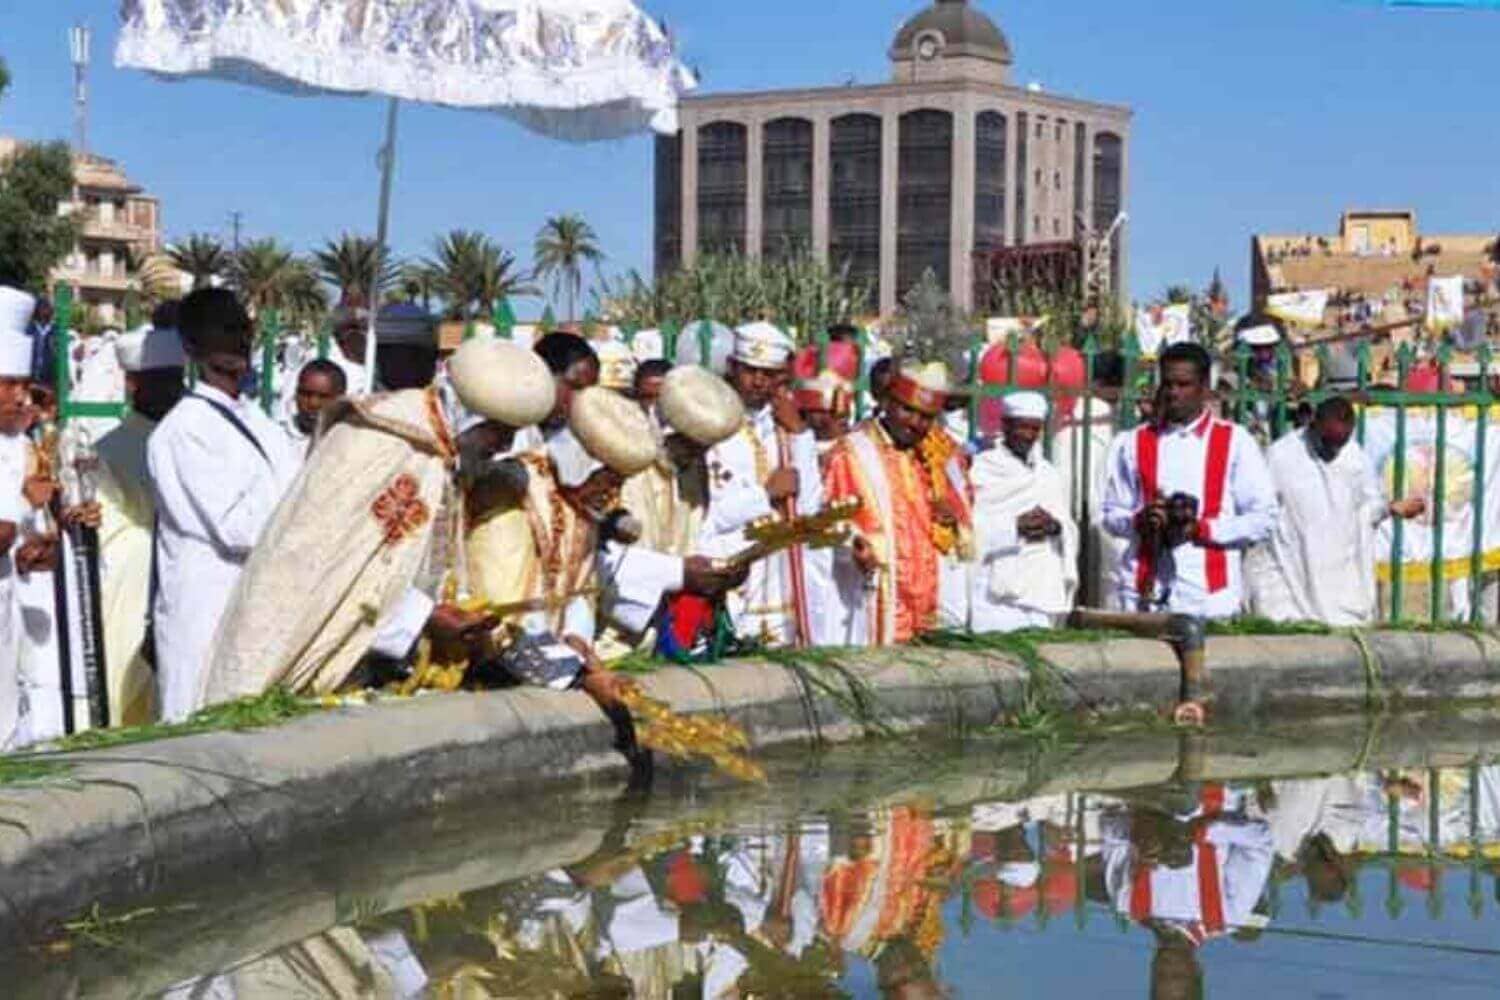 Timket Festival Celebration in Eritrea